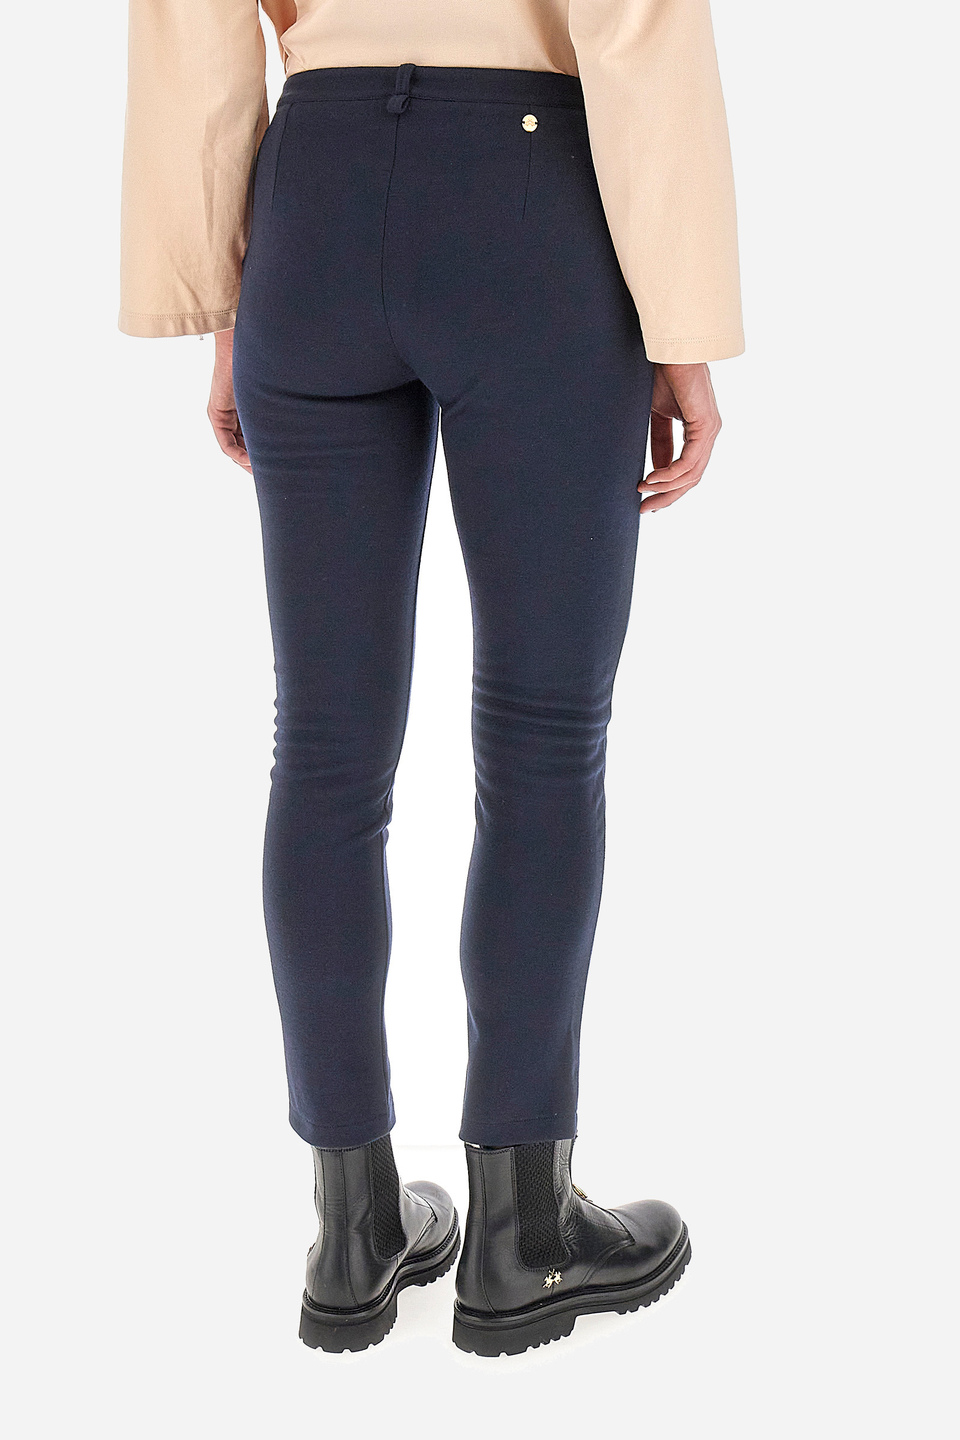 Pantaloni donna regular fit - Winter | La Martina - Official Online Shop